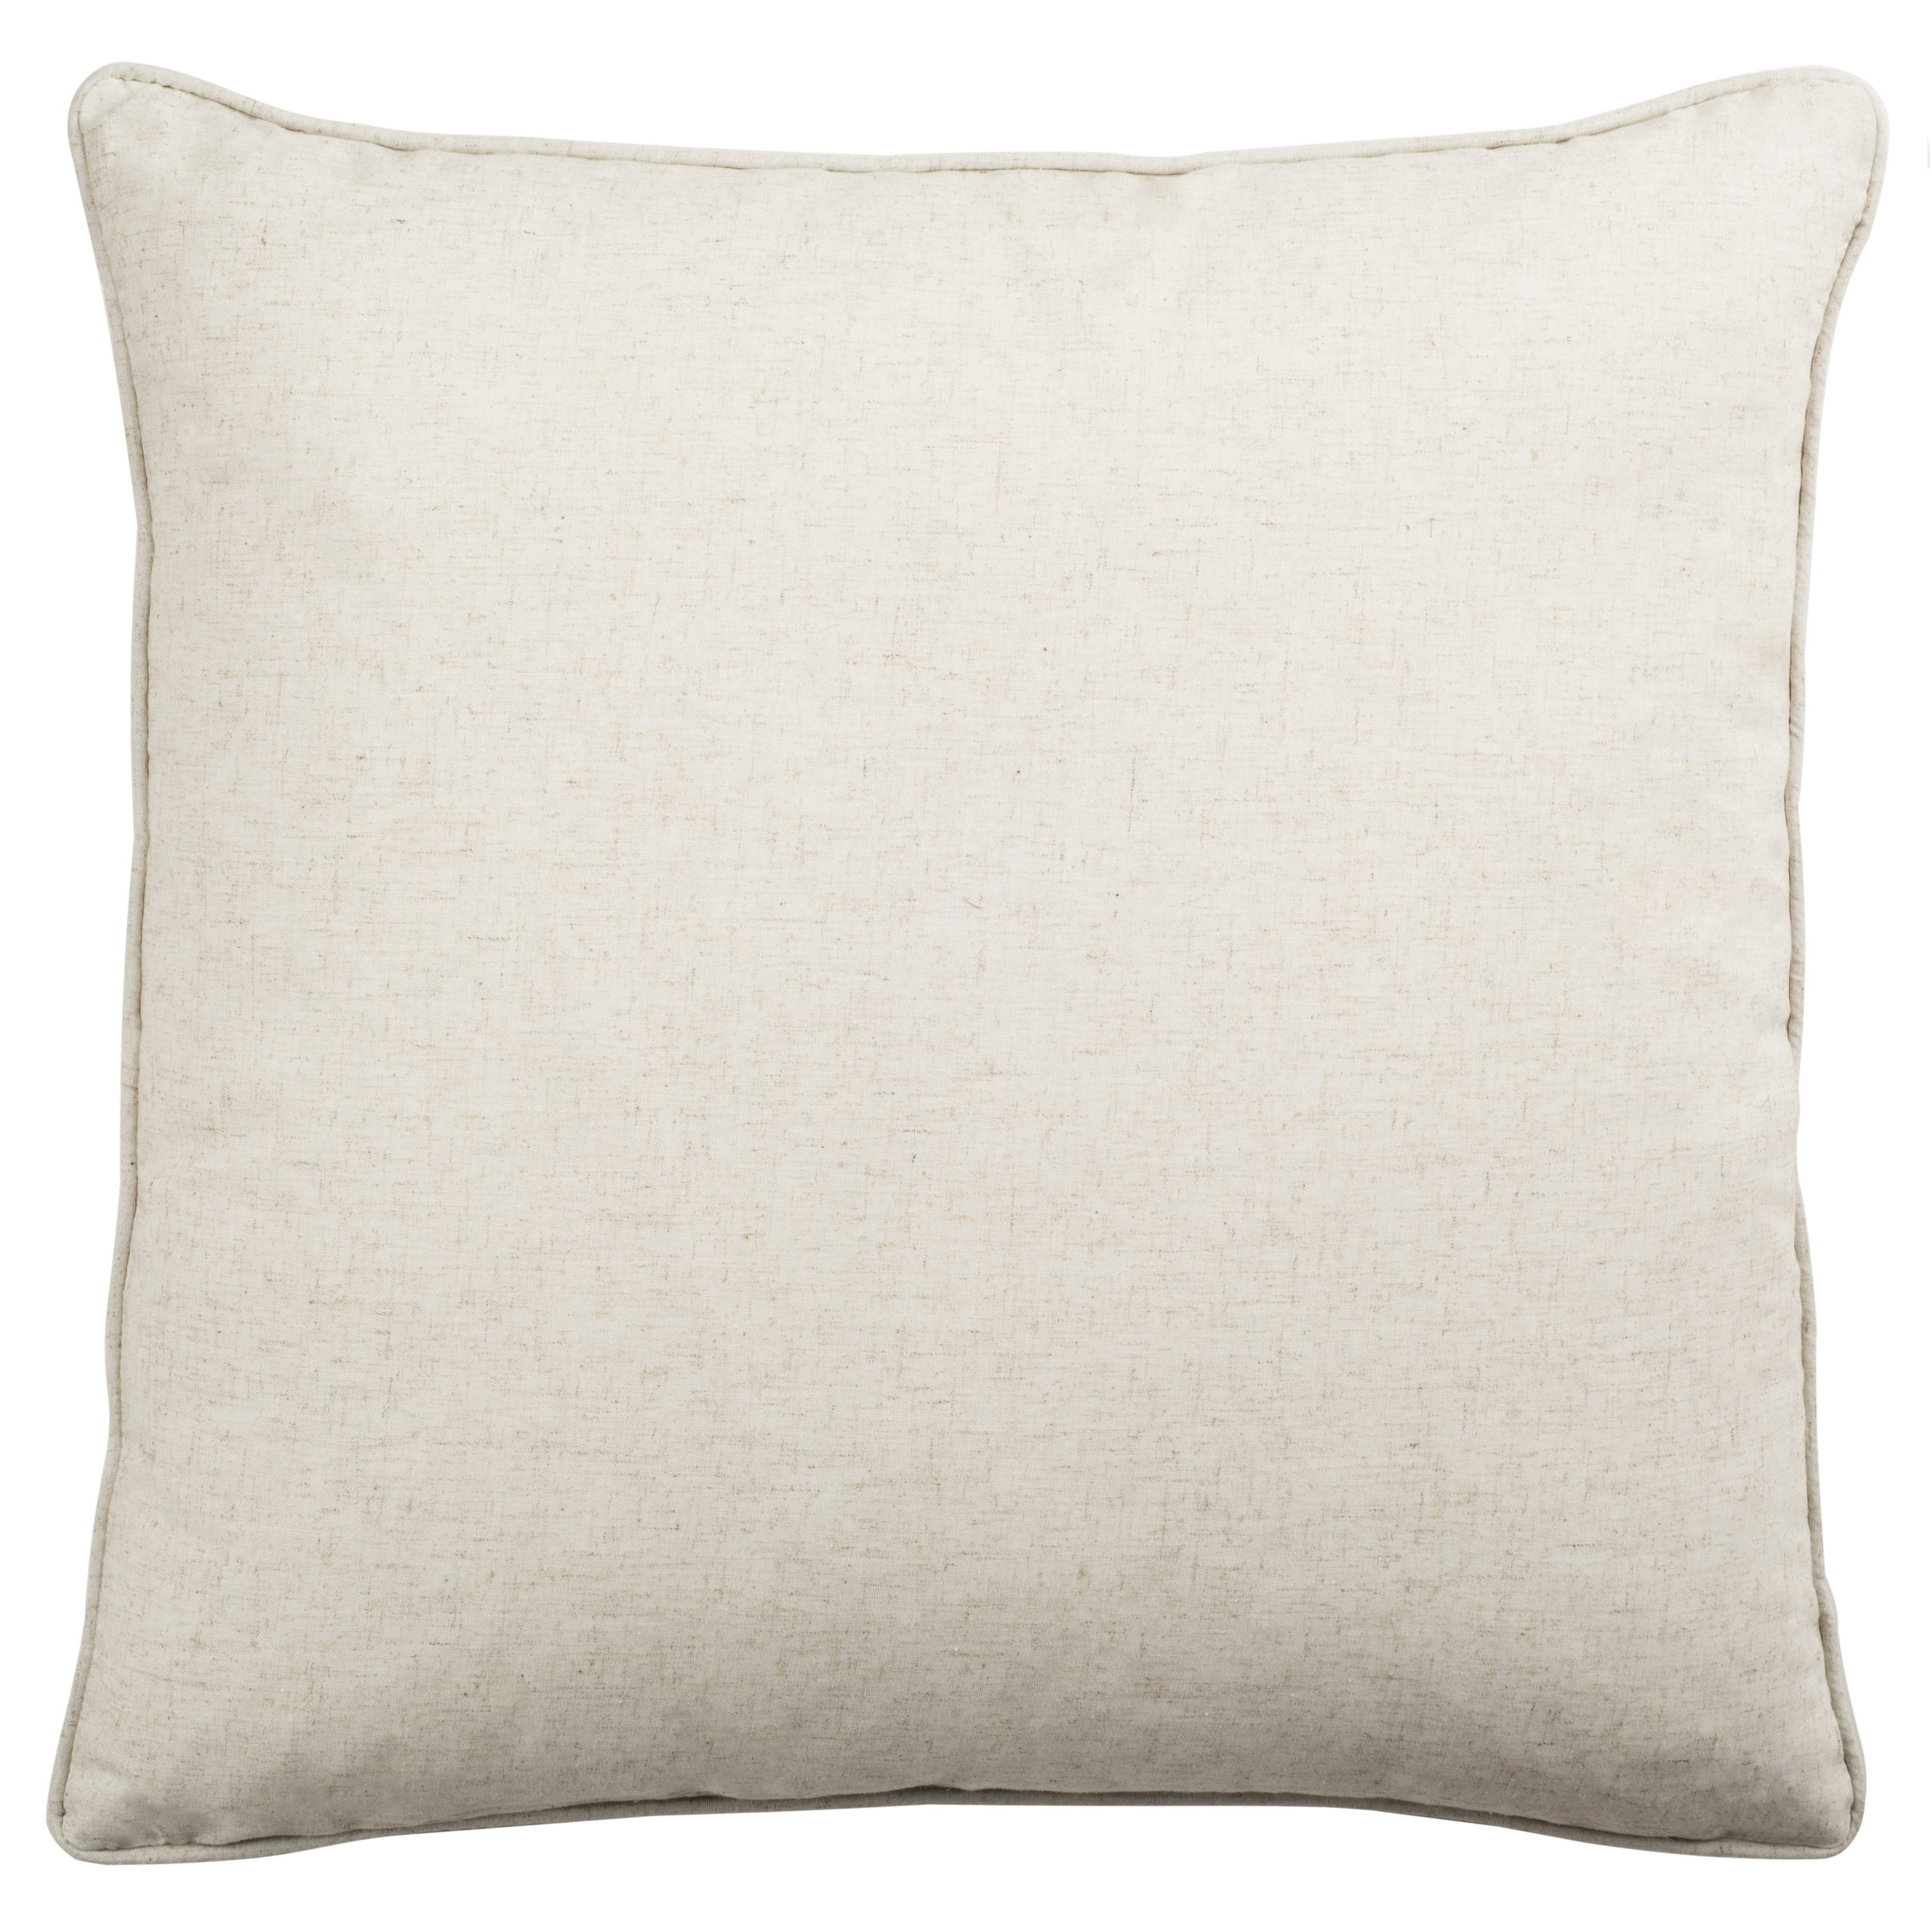 Maize Black Decorative Pillow Set of 2 ID 3305164 